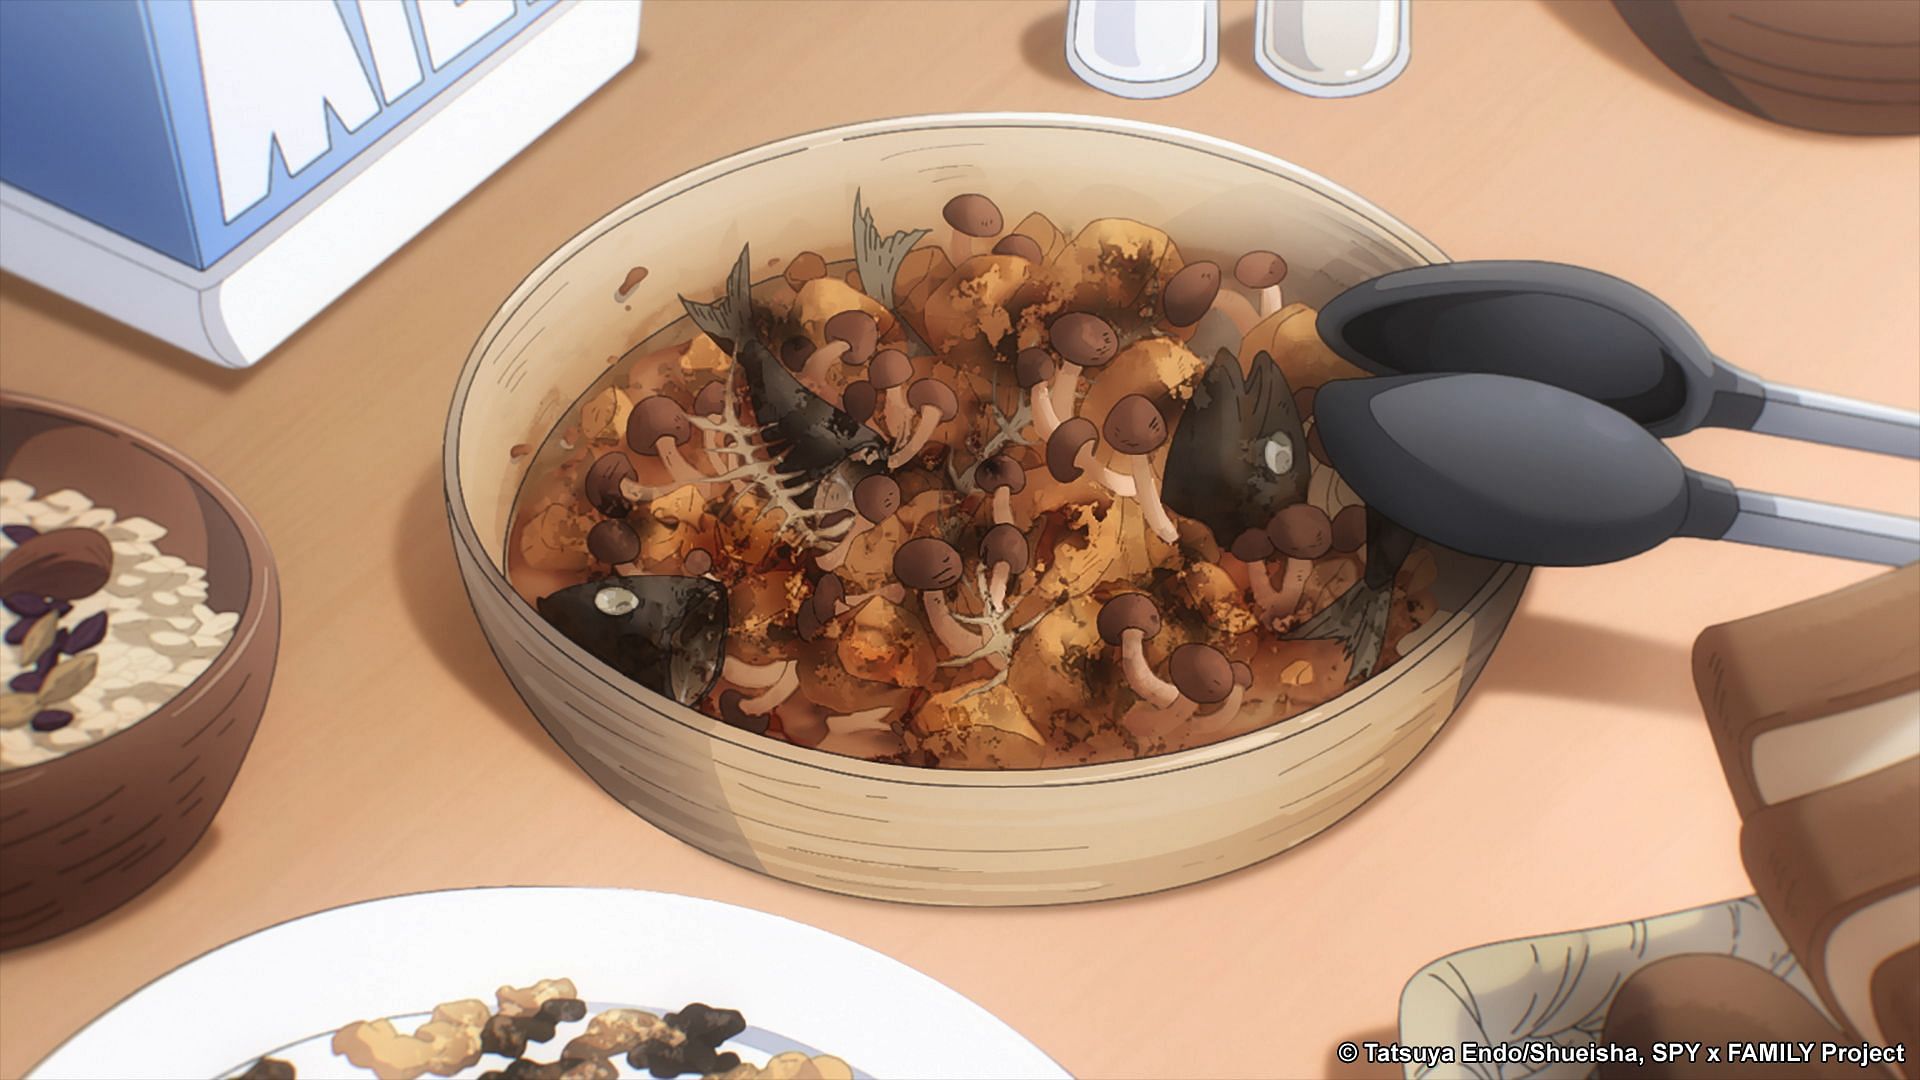 This does not look appetizing (Image via Tatsuya Endo/Shueisha, Spy X Family)